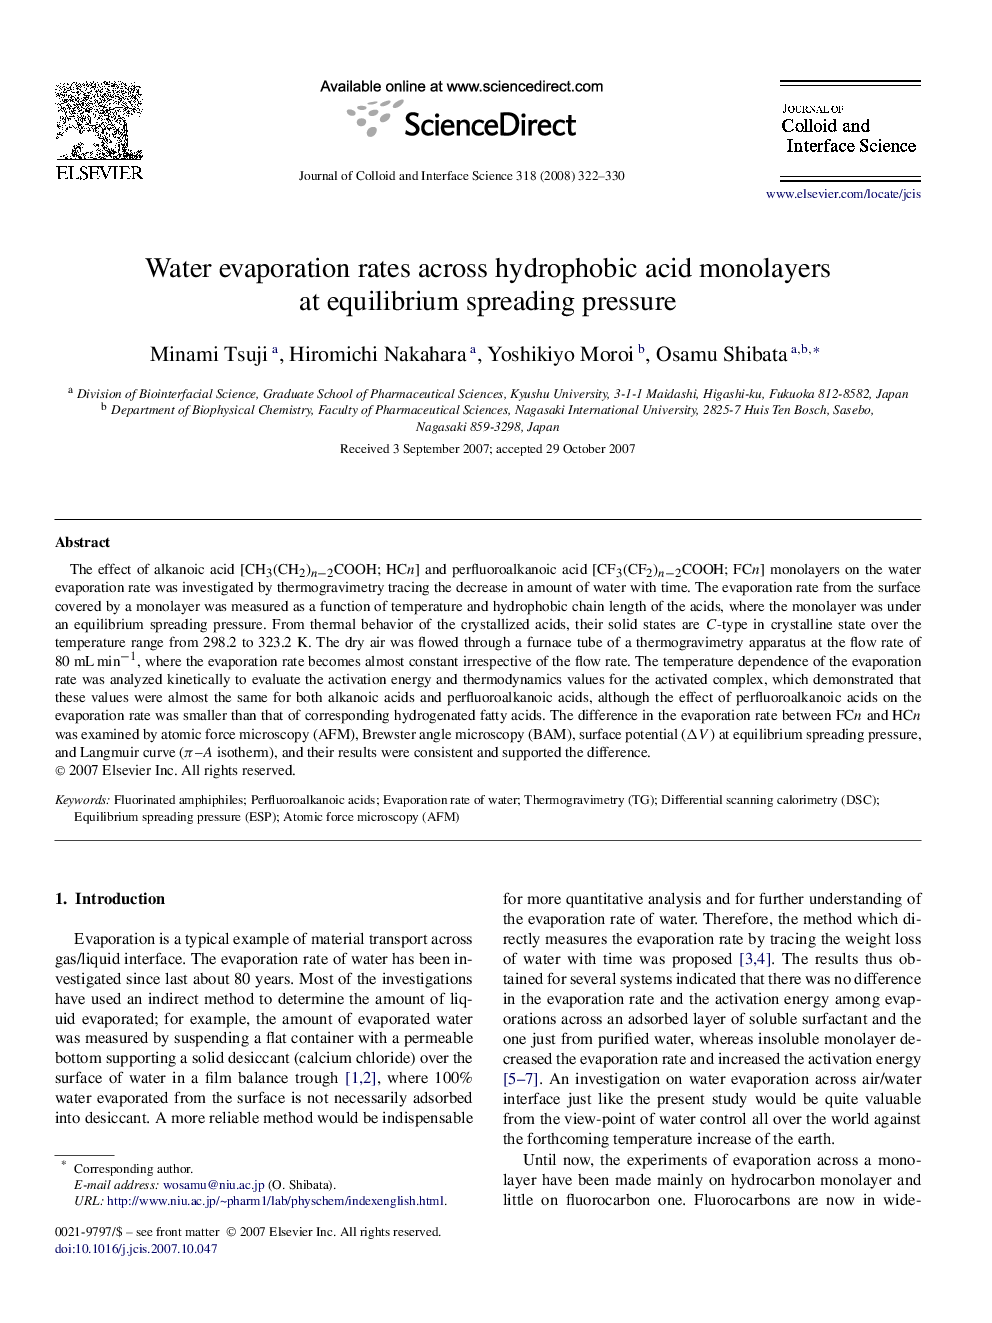 Water evaporation rates across hydrophobic acid monolayers at equilibrium spreading pressure